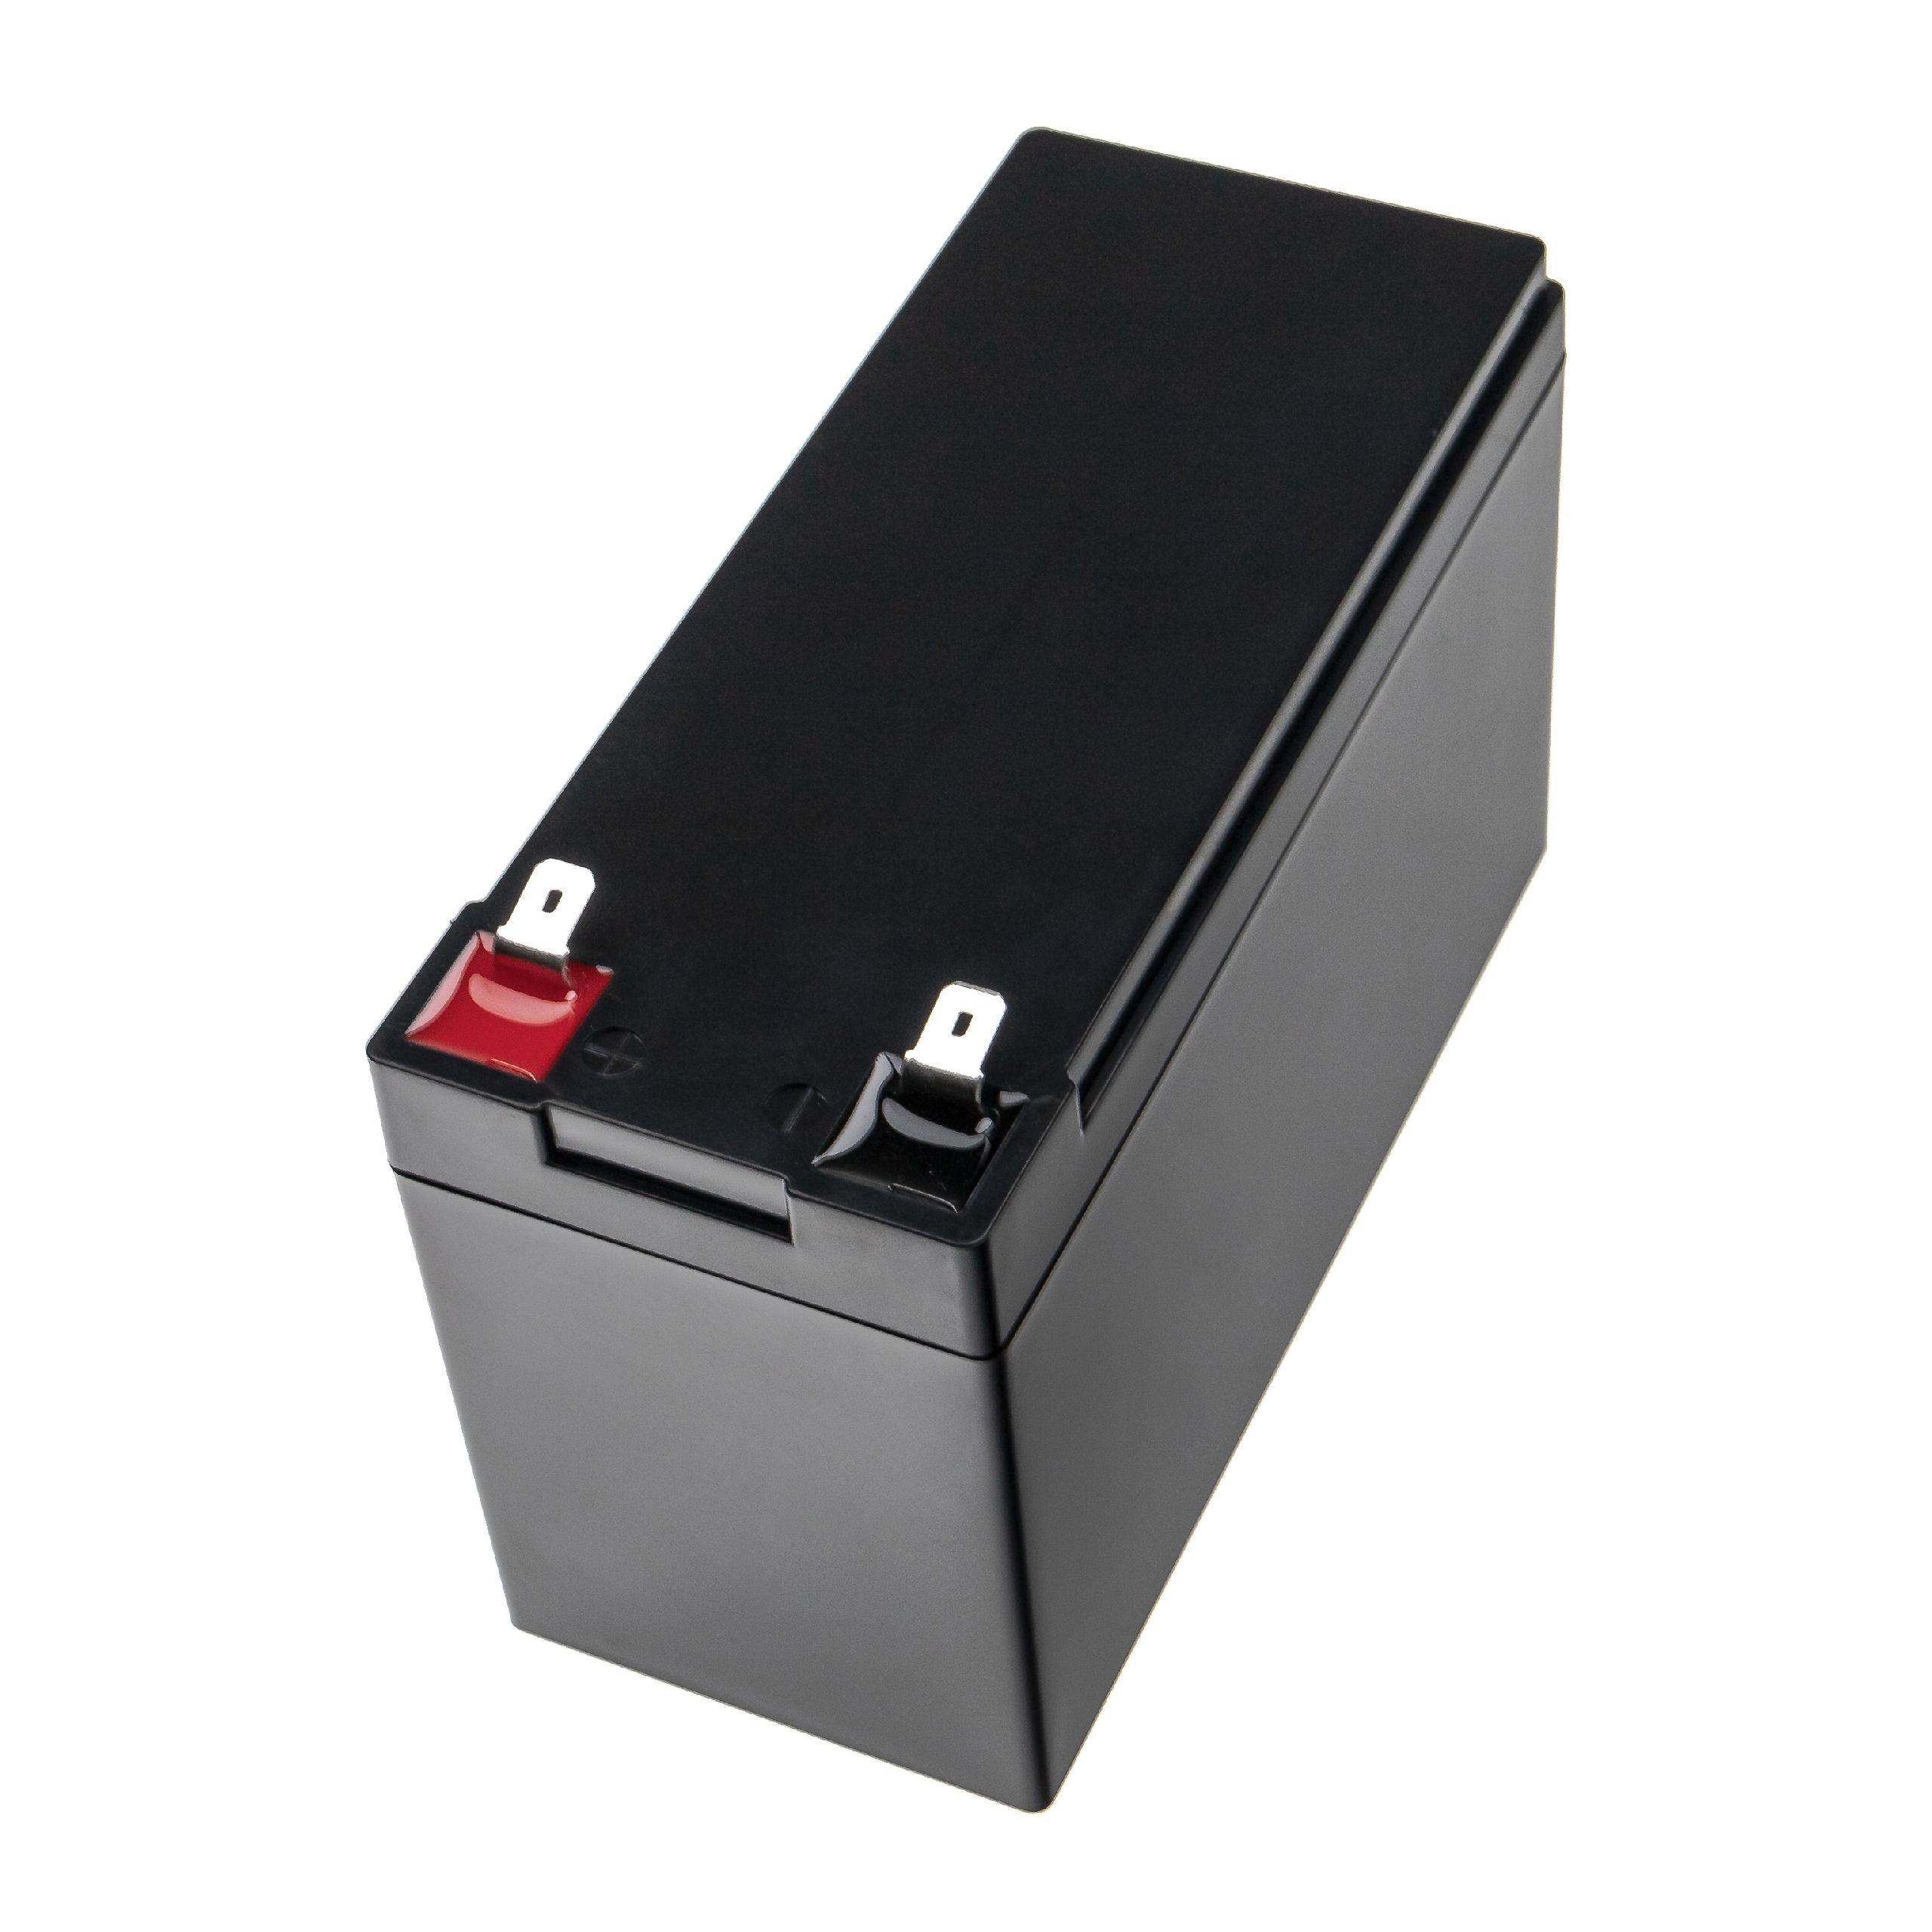 Bordbatterie Akku passend für Wohnmobil, Boot, Solaranlage - 6 Ah 12,8V LiFePO4, 6000mAh, schwarz